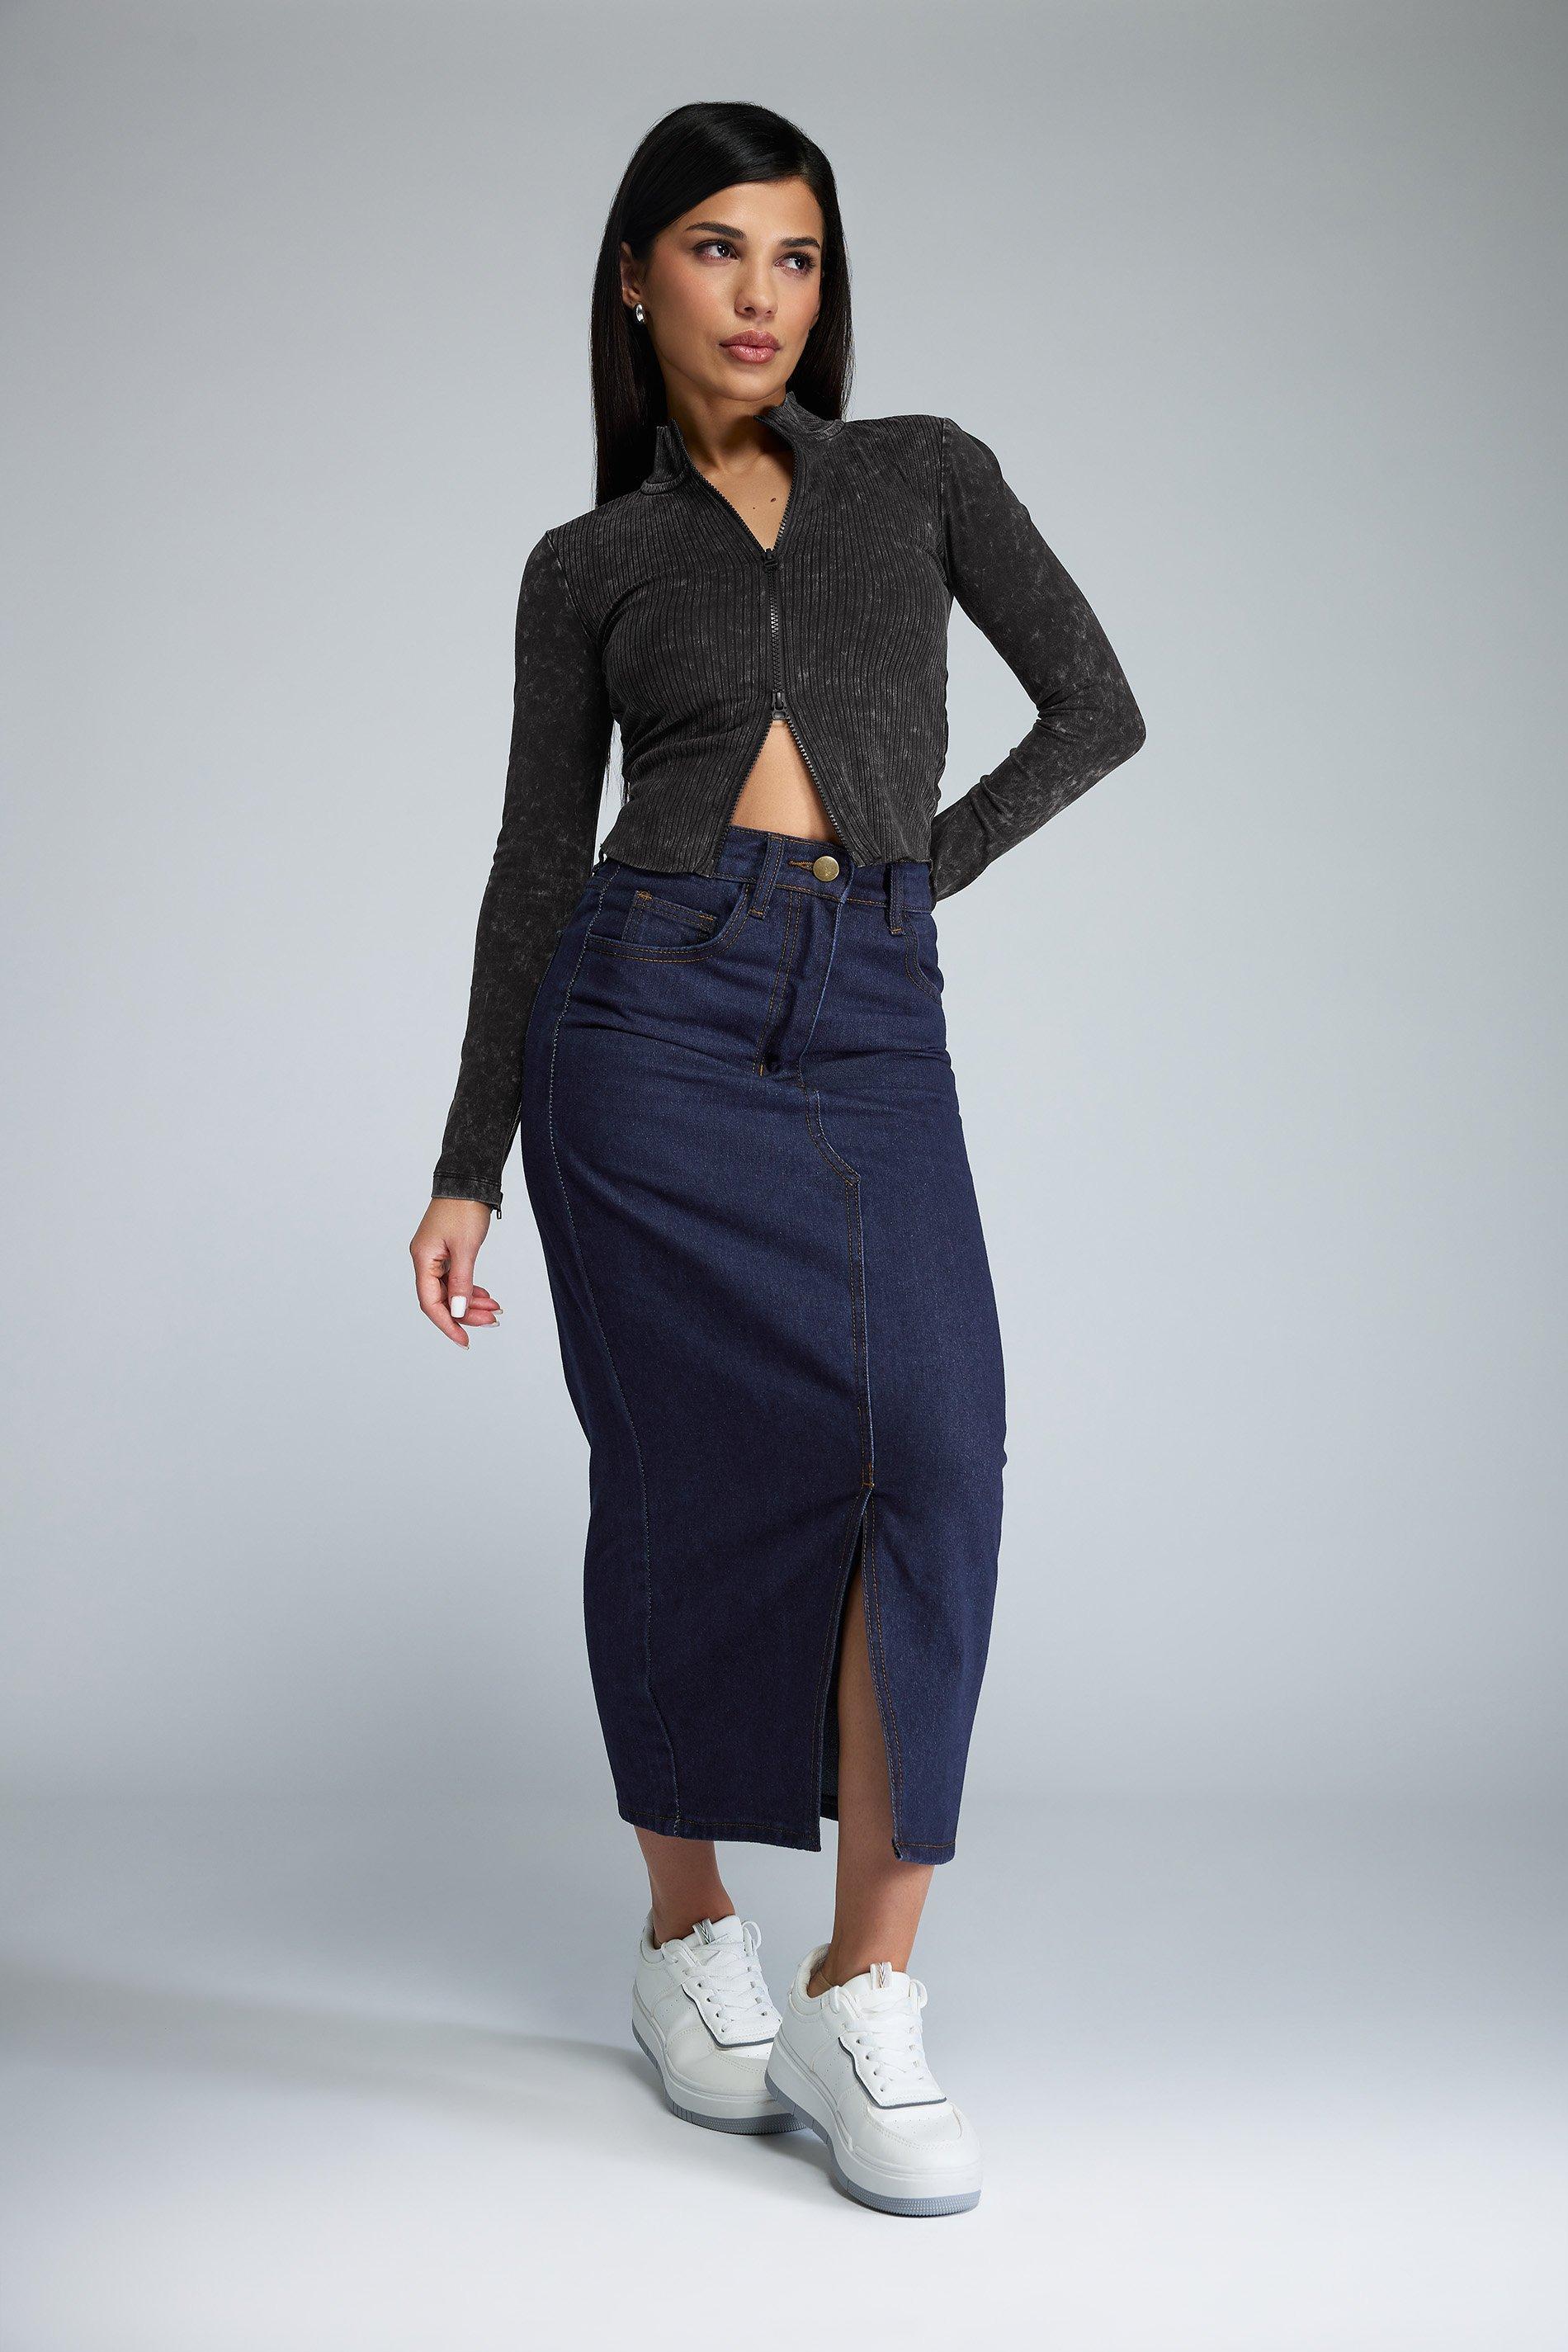 Cato Fashions | Cato Plus Petite Stretchy Denim Skirt